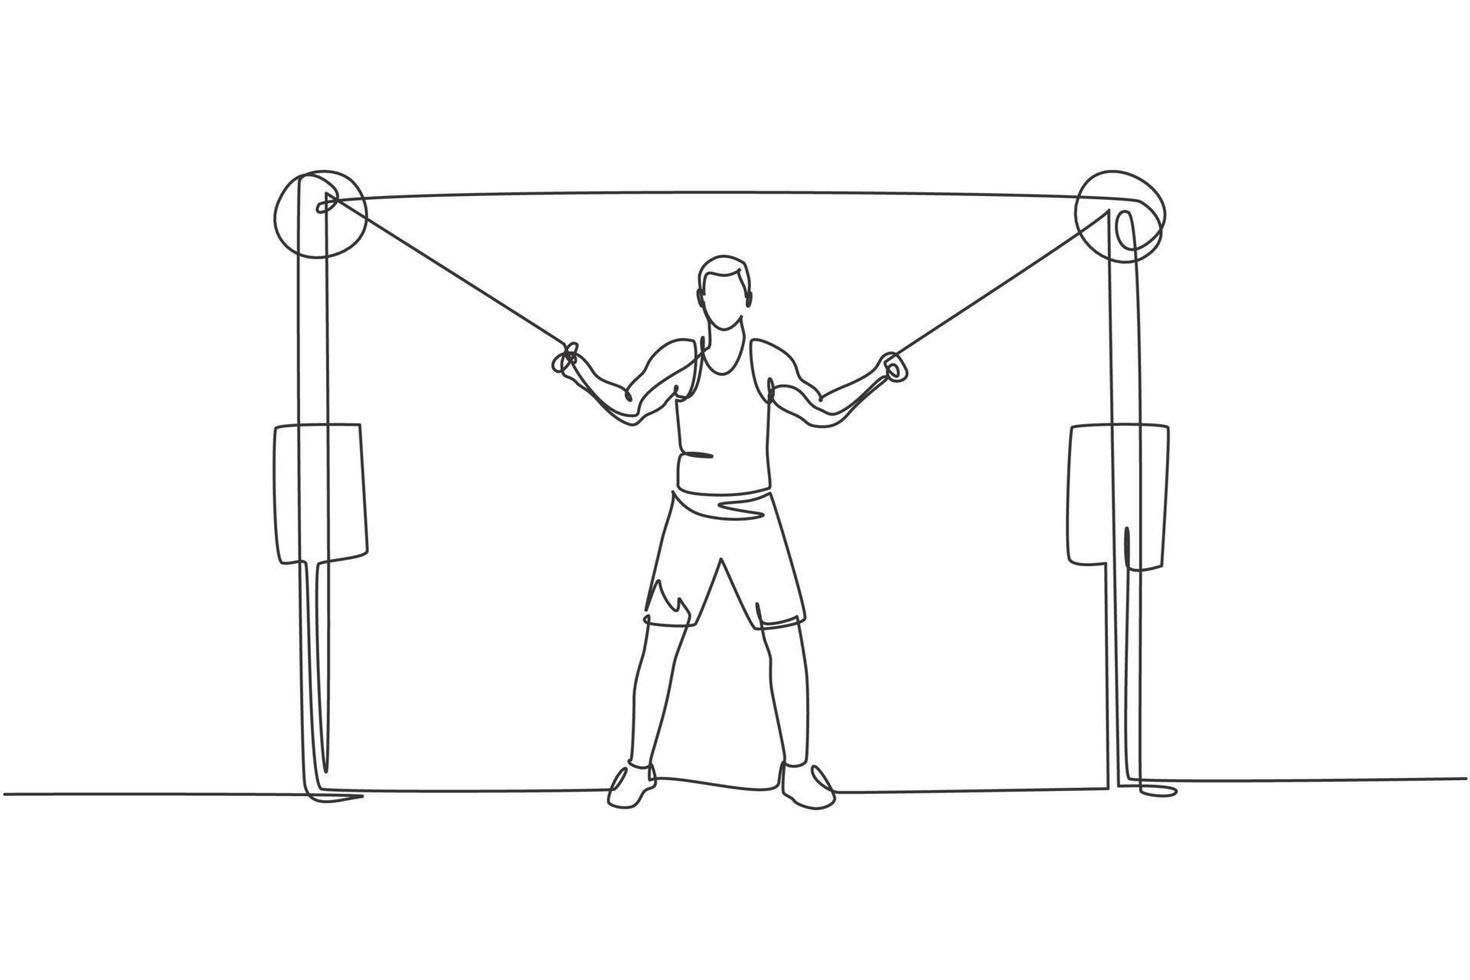 en enda linjeritning av ung energisk man träning med cross over kabel i gym fitnesscenter vektor illustration grafik. hälsosam livsstil sport koncept. modern kontinuerlig linjeritningsdesign